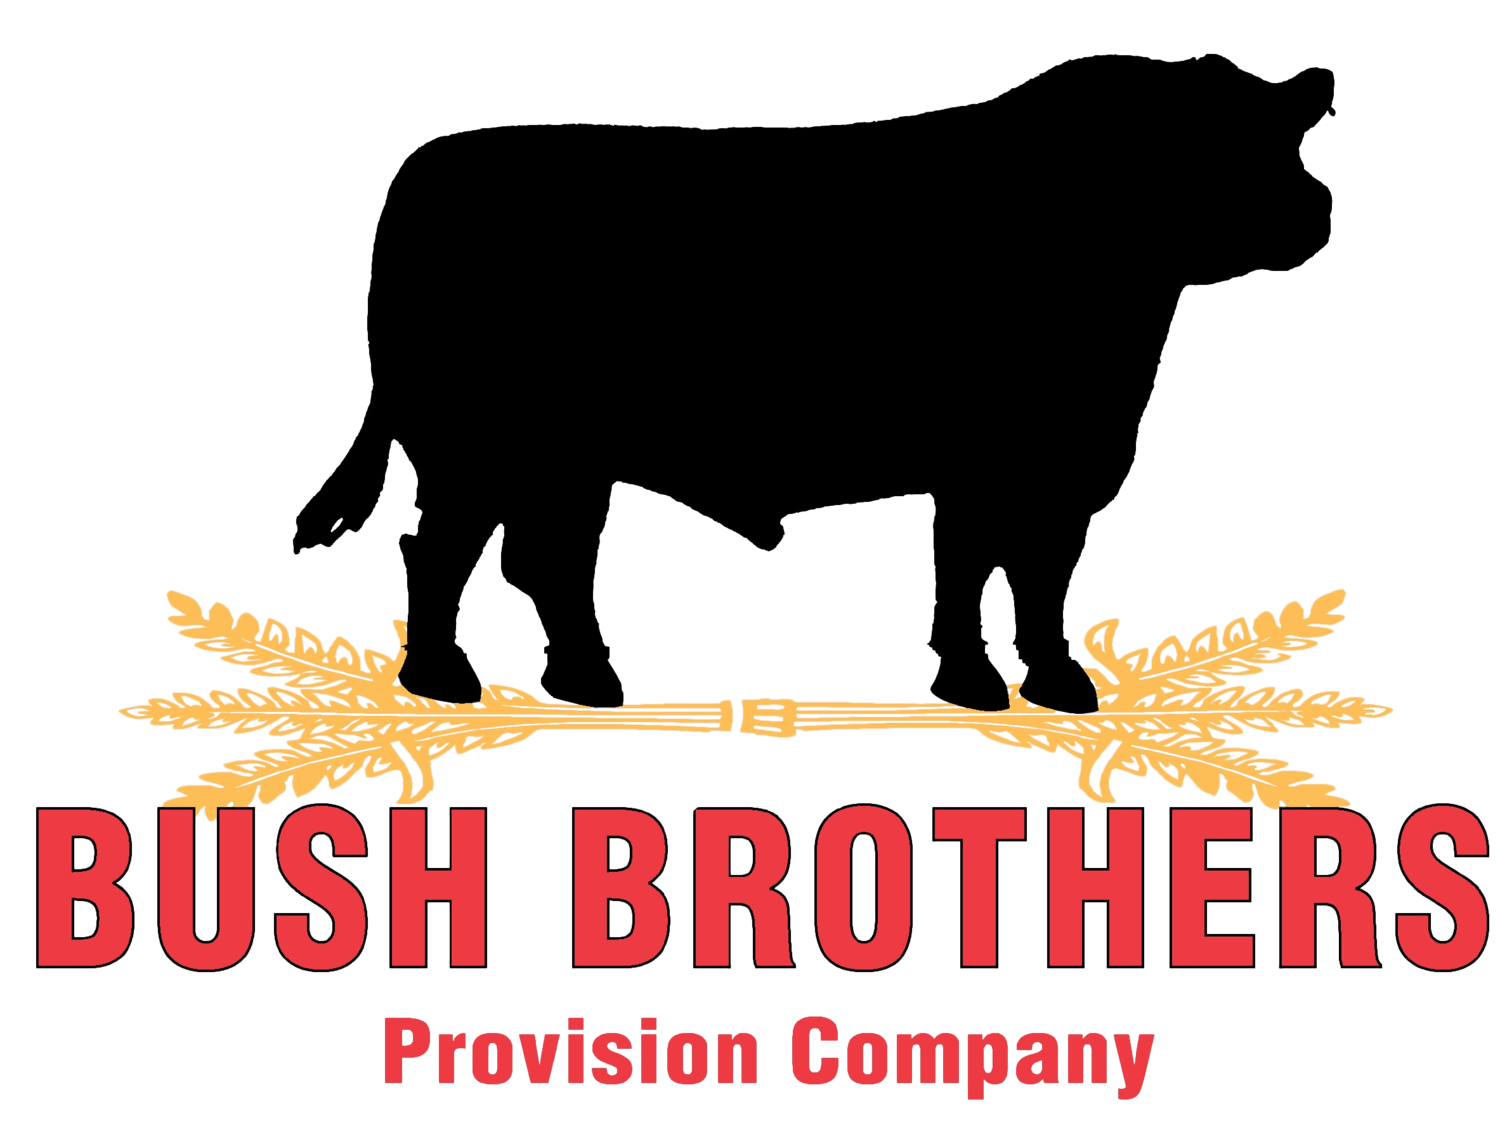 Bush Brothers Provision Company